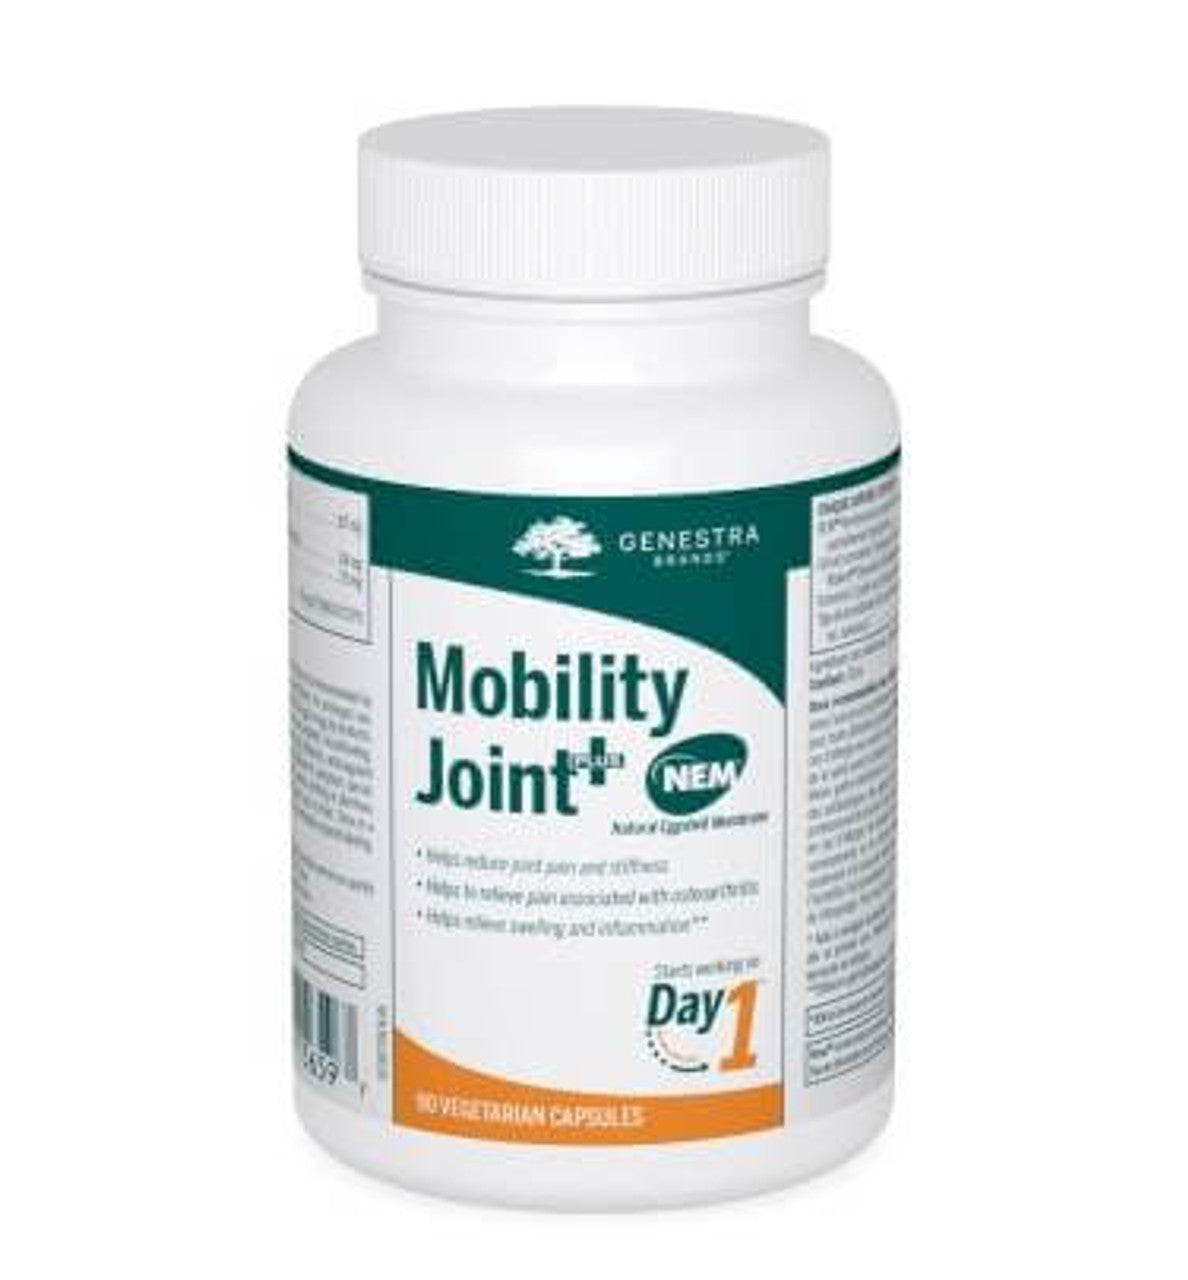 Genestra Mobility Joint Plus NEM 90 Capsules